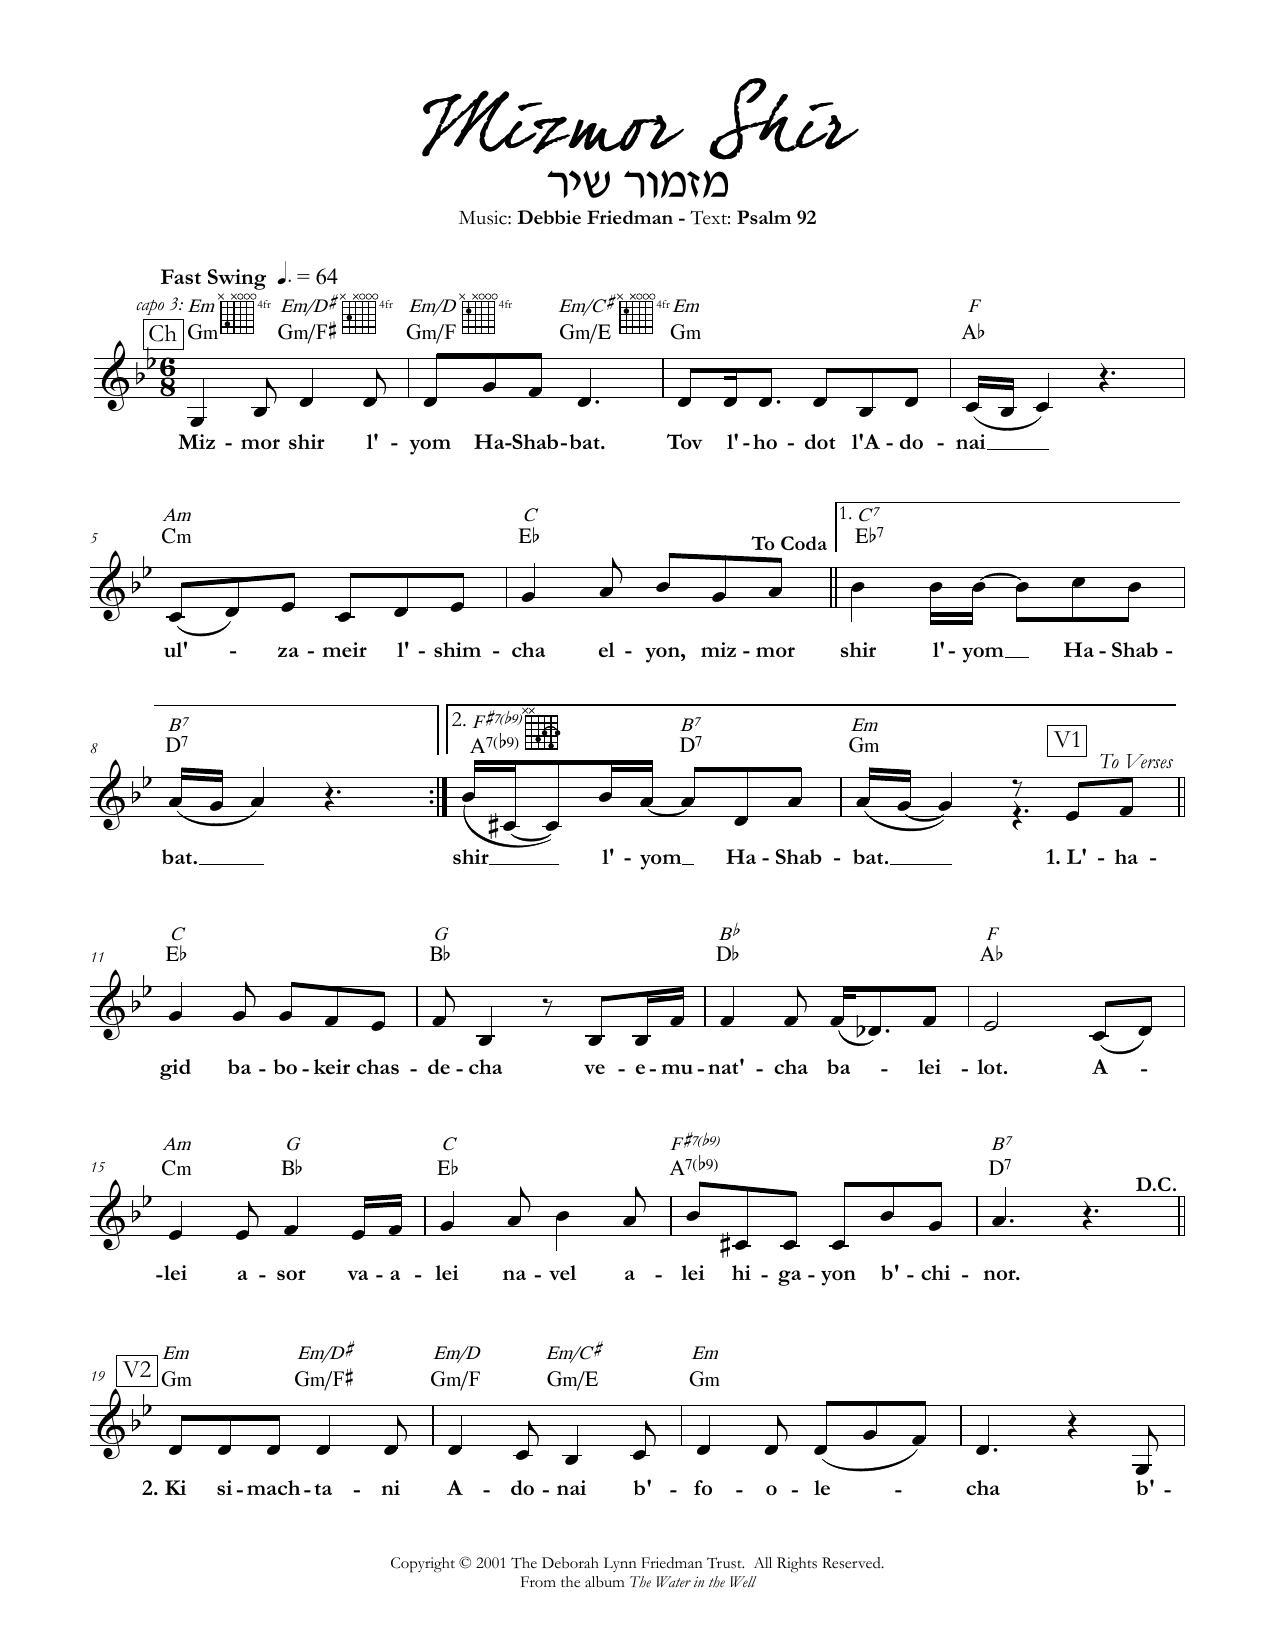 Debbie Friedman Mizmor Shir Sheet Music Notes & Chords for Lead Sheet / Fake Book - Download or Print PDF